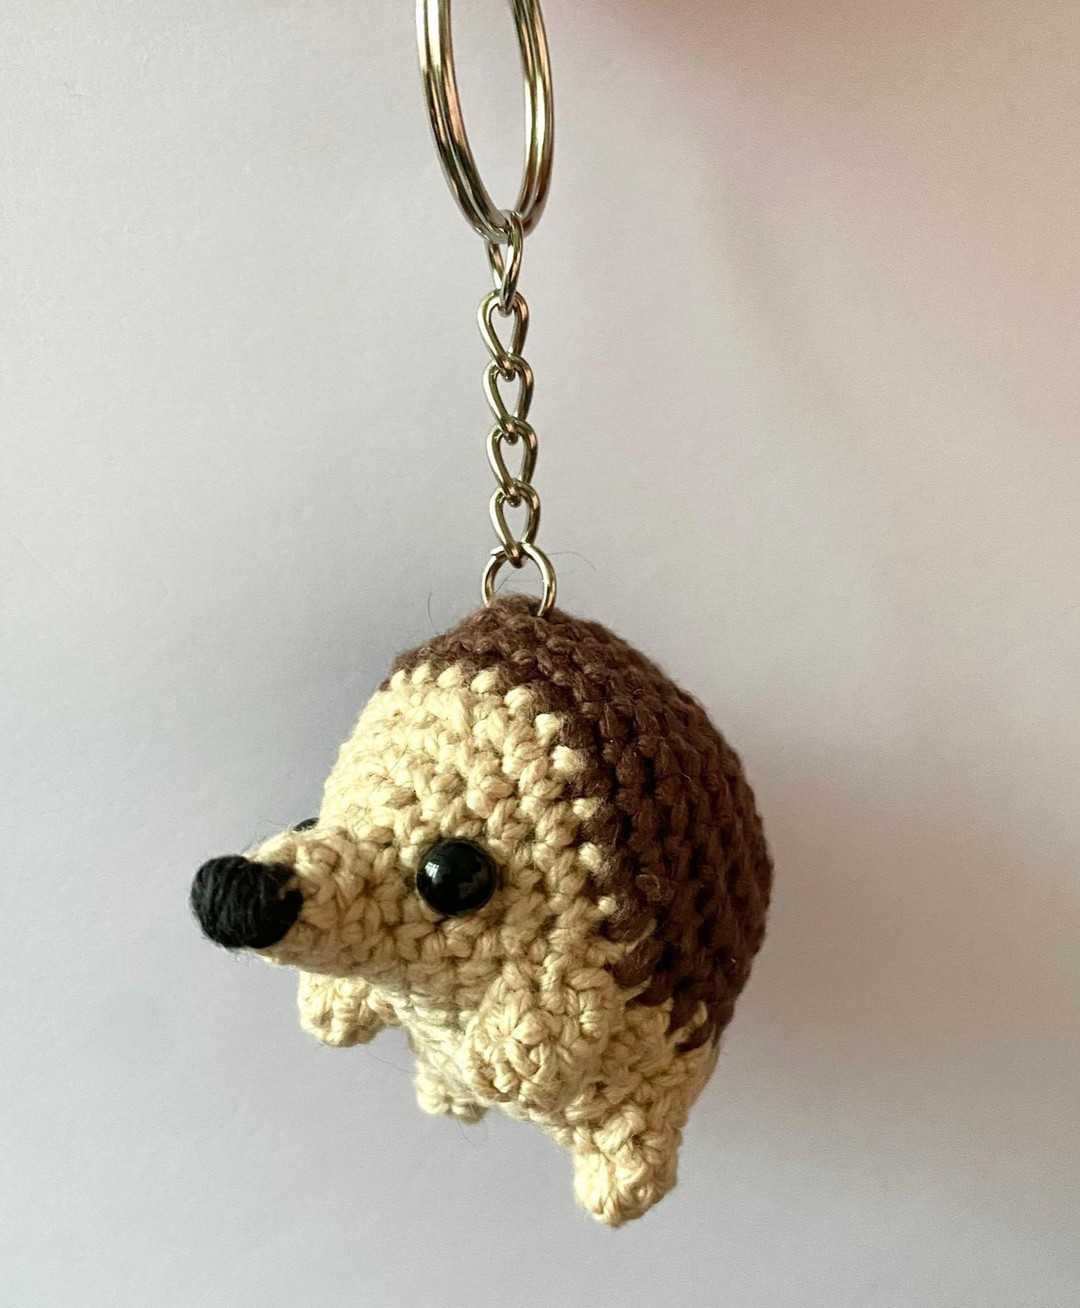 hedgehog crochet pattern keychain